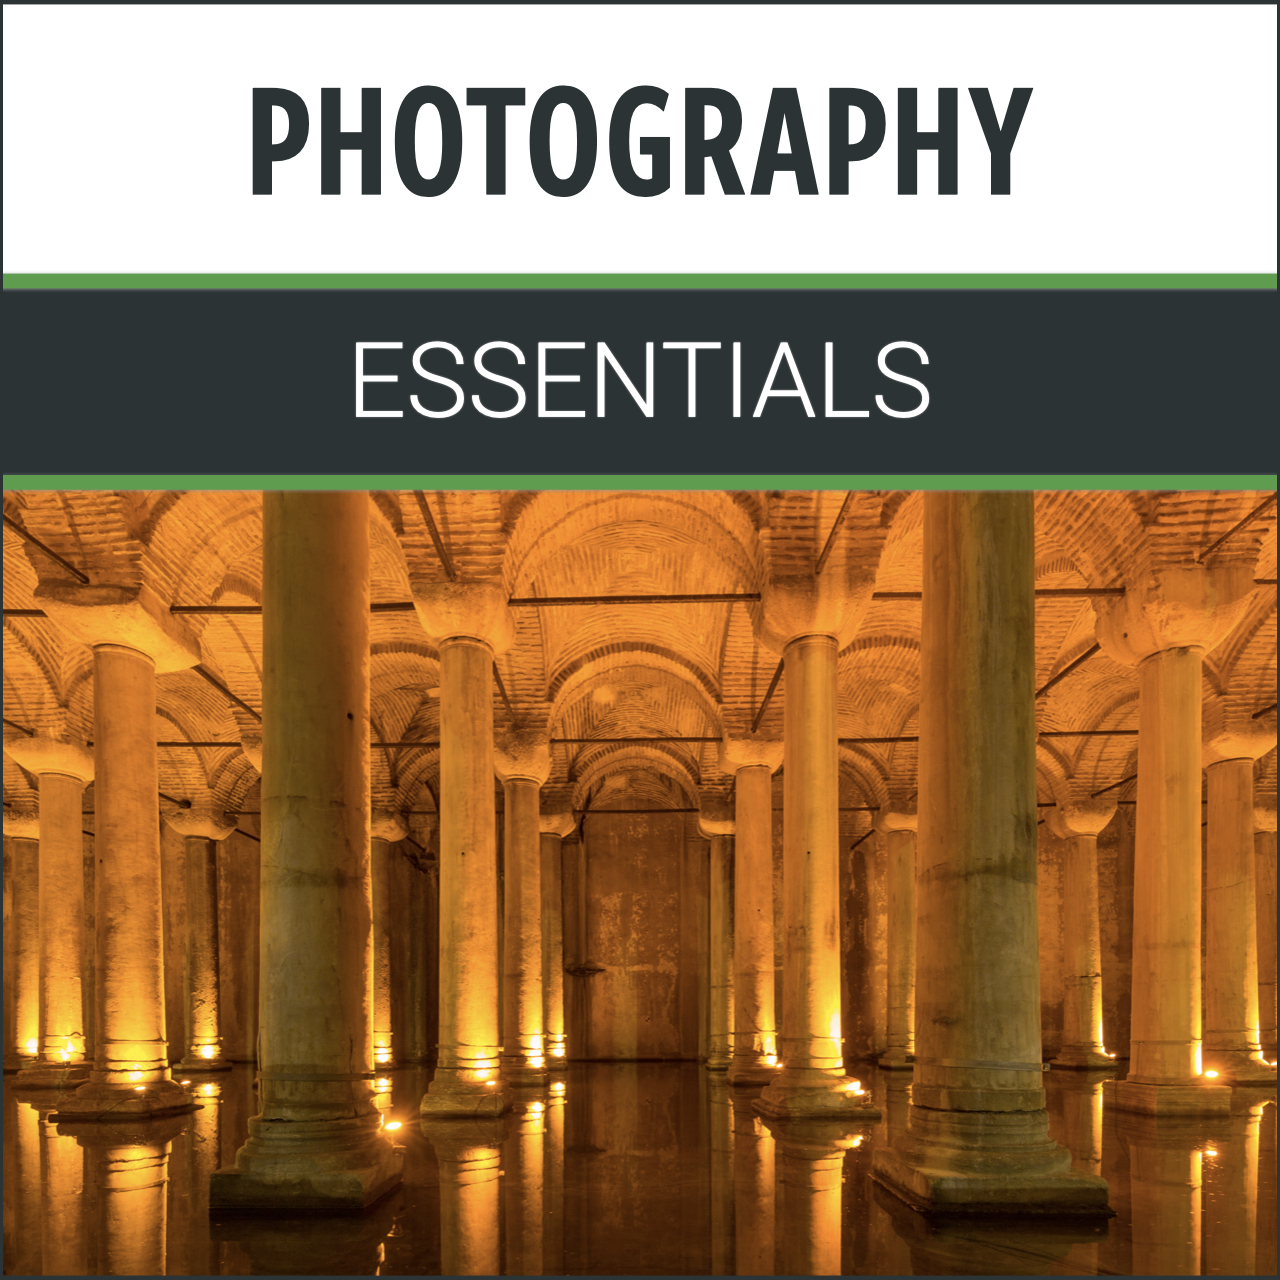 Photography Essentials